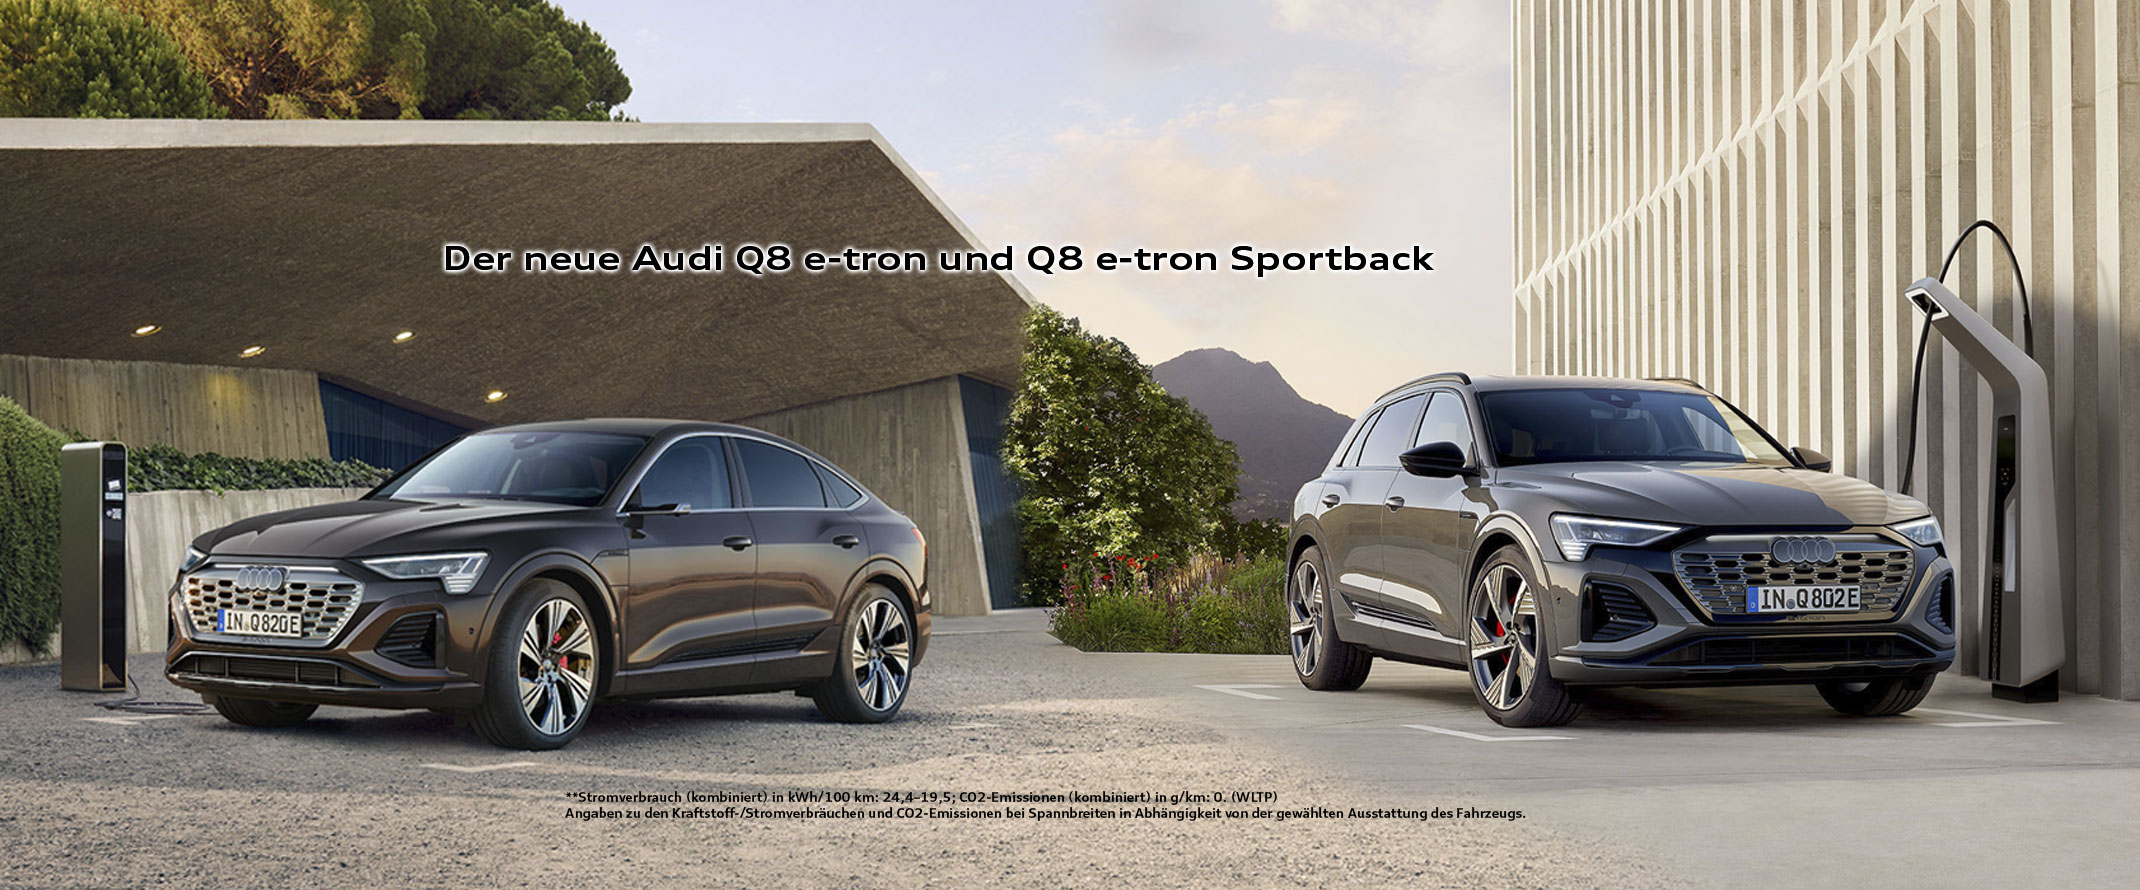 Audi Q8 e-tron und Q8 e-tron Sportback - Jetzt bestellen!